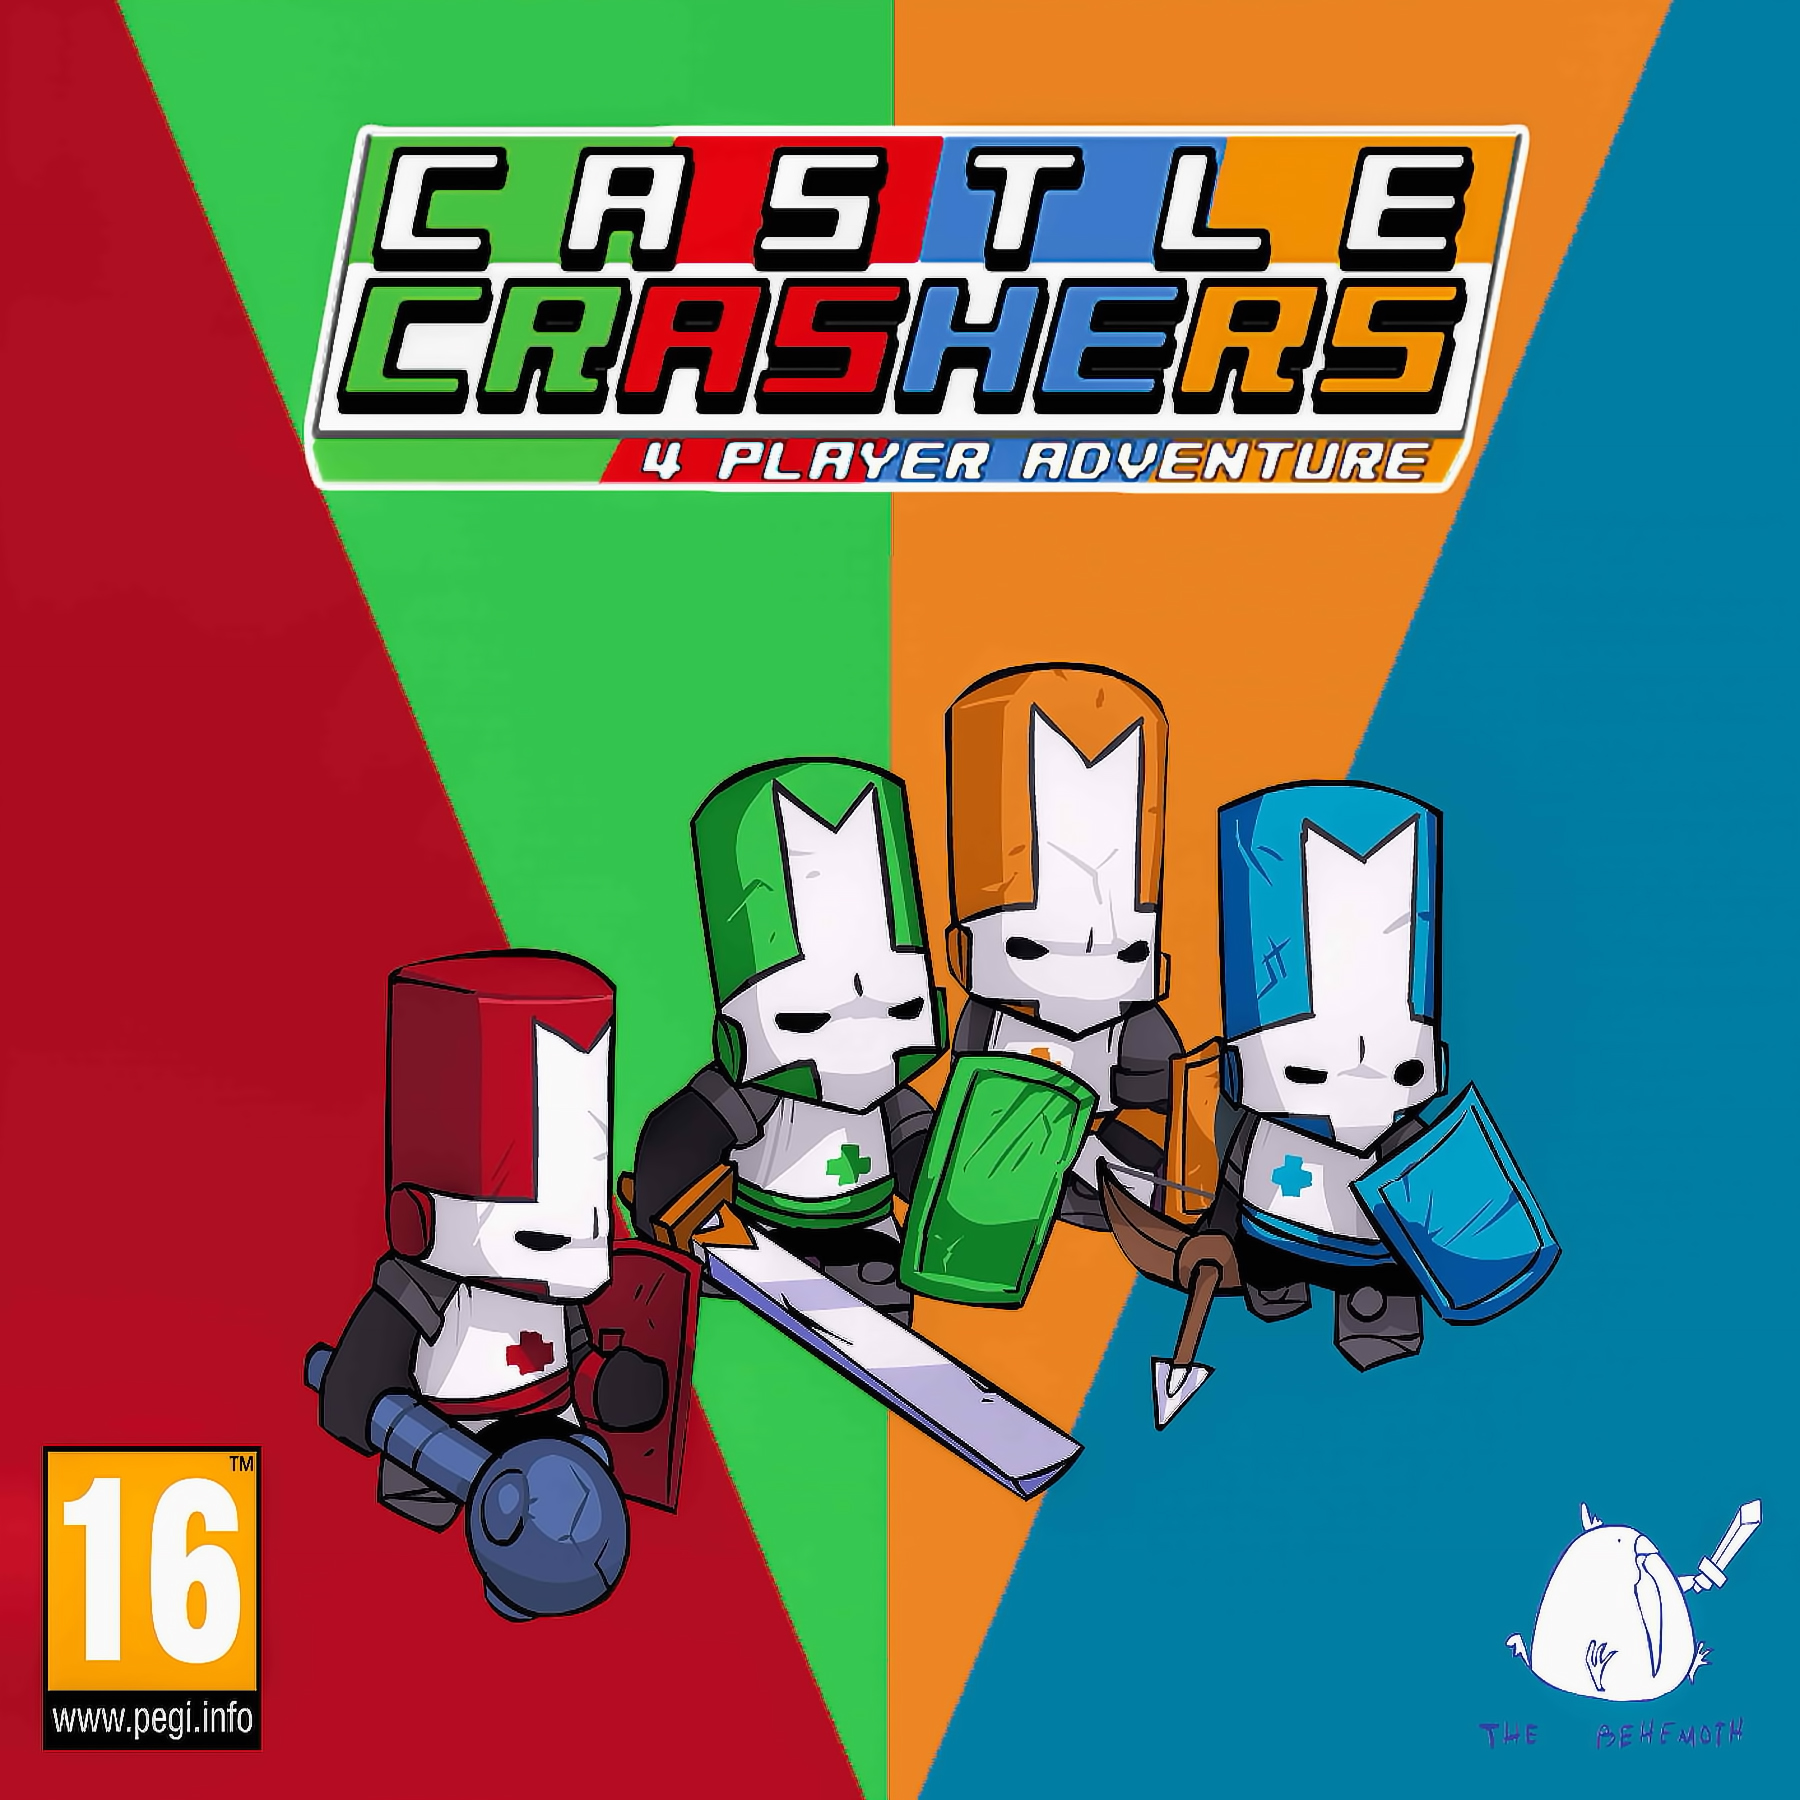 Castle Crashers Crashes Into Steam